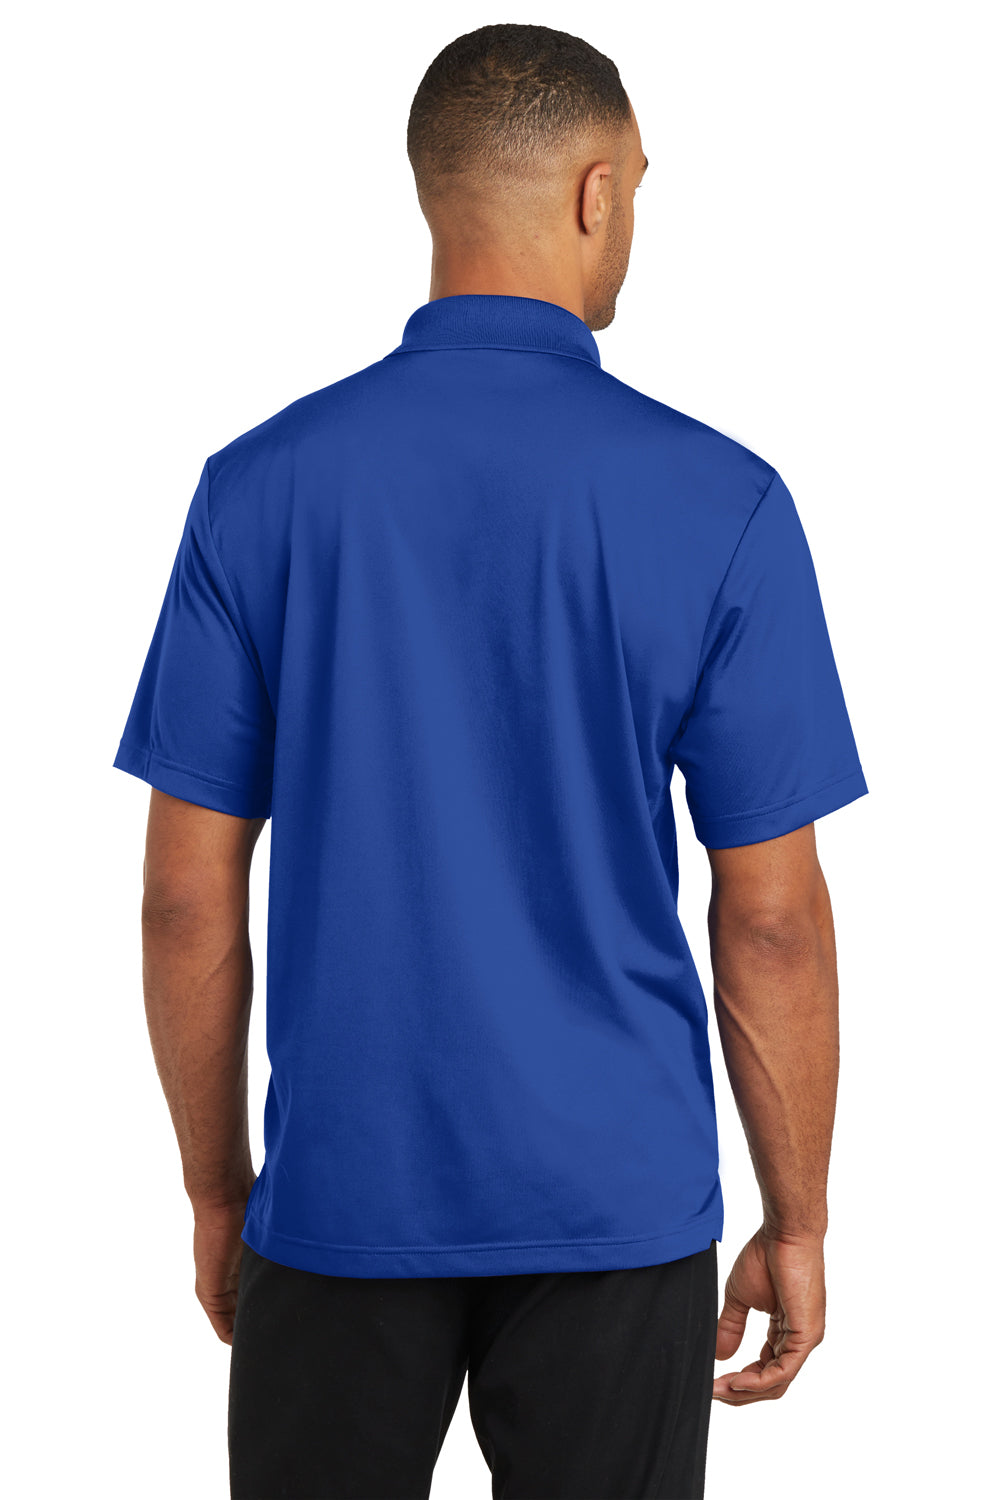 CornerStone CS421 Mens Gripper Moisture Wicking Short Sleeve Polo Shirt Royal Blue Back